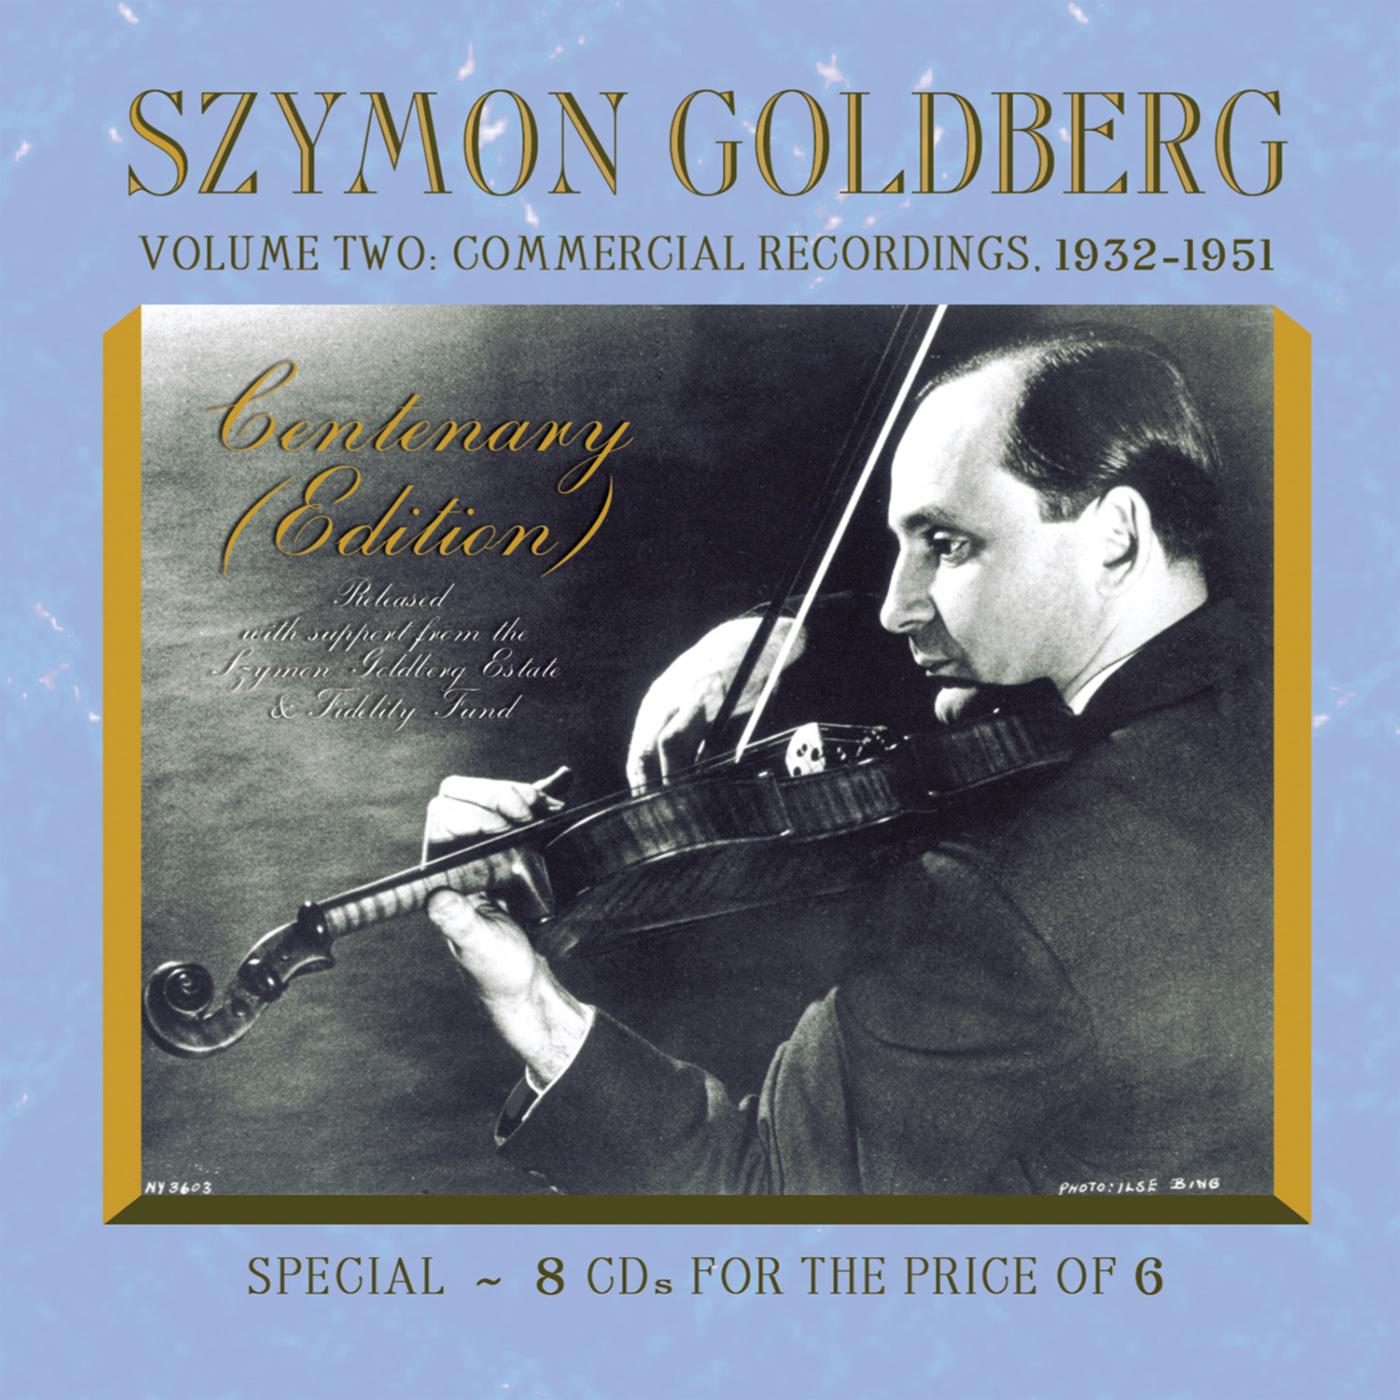 SZYMON GOLDBERG CENTENARY EDITION, VOL. 2 - Commercial Recordings (1932-1951)